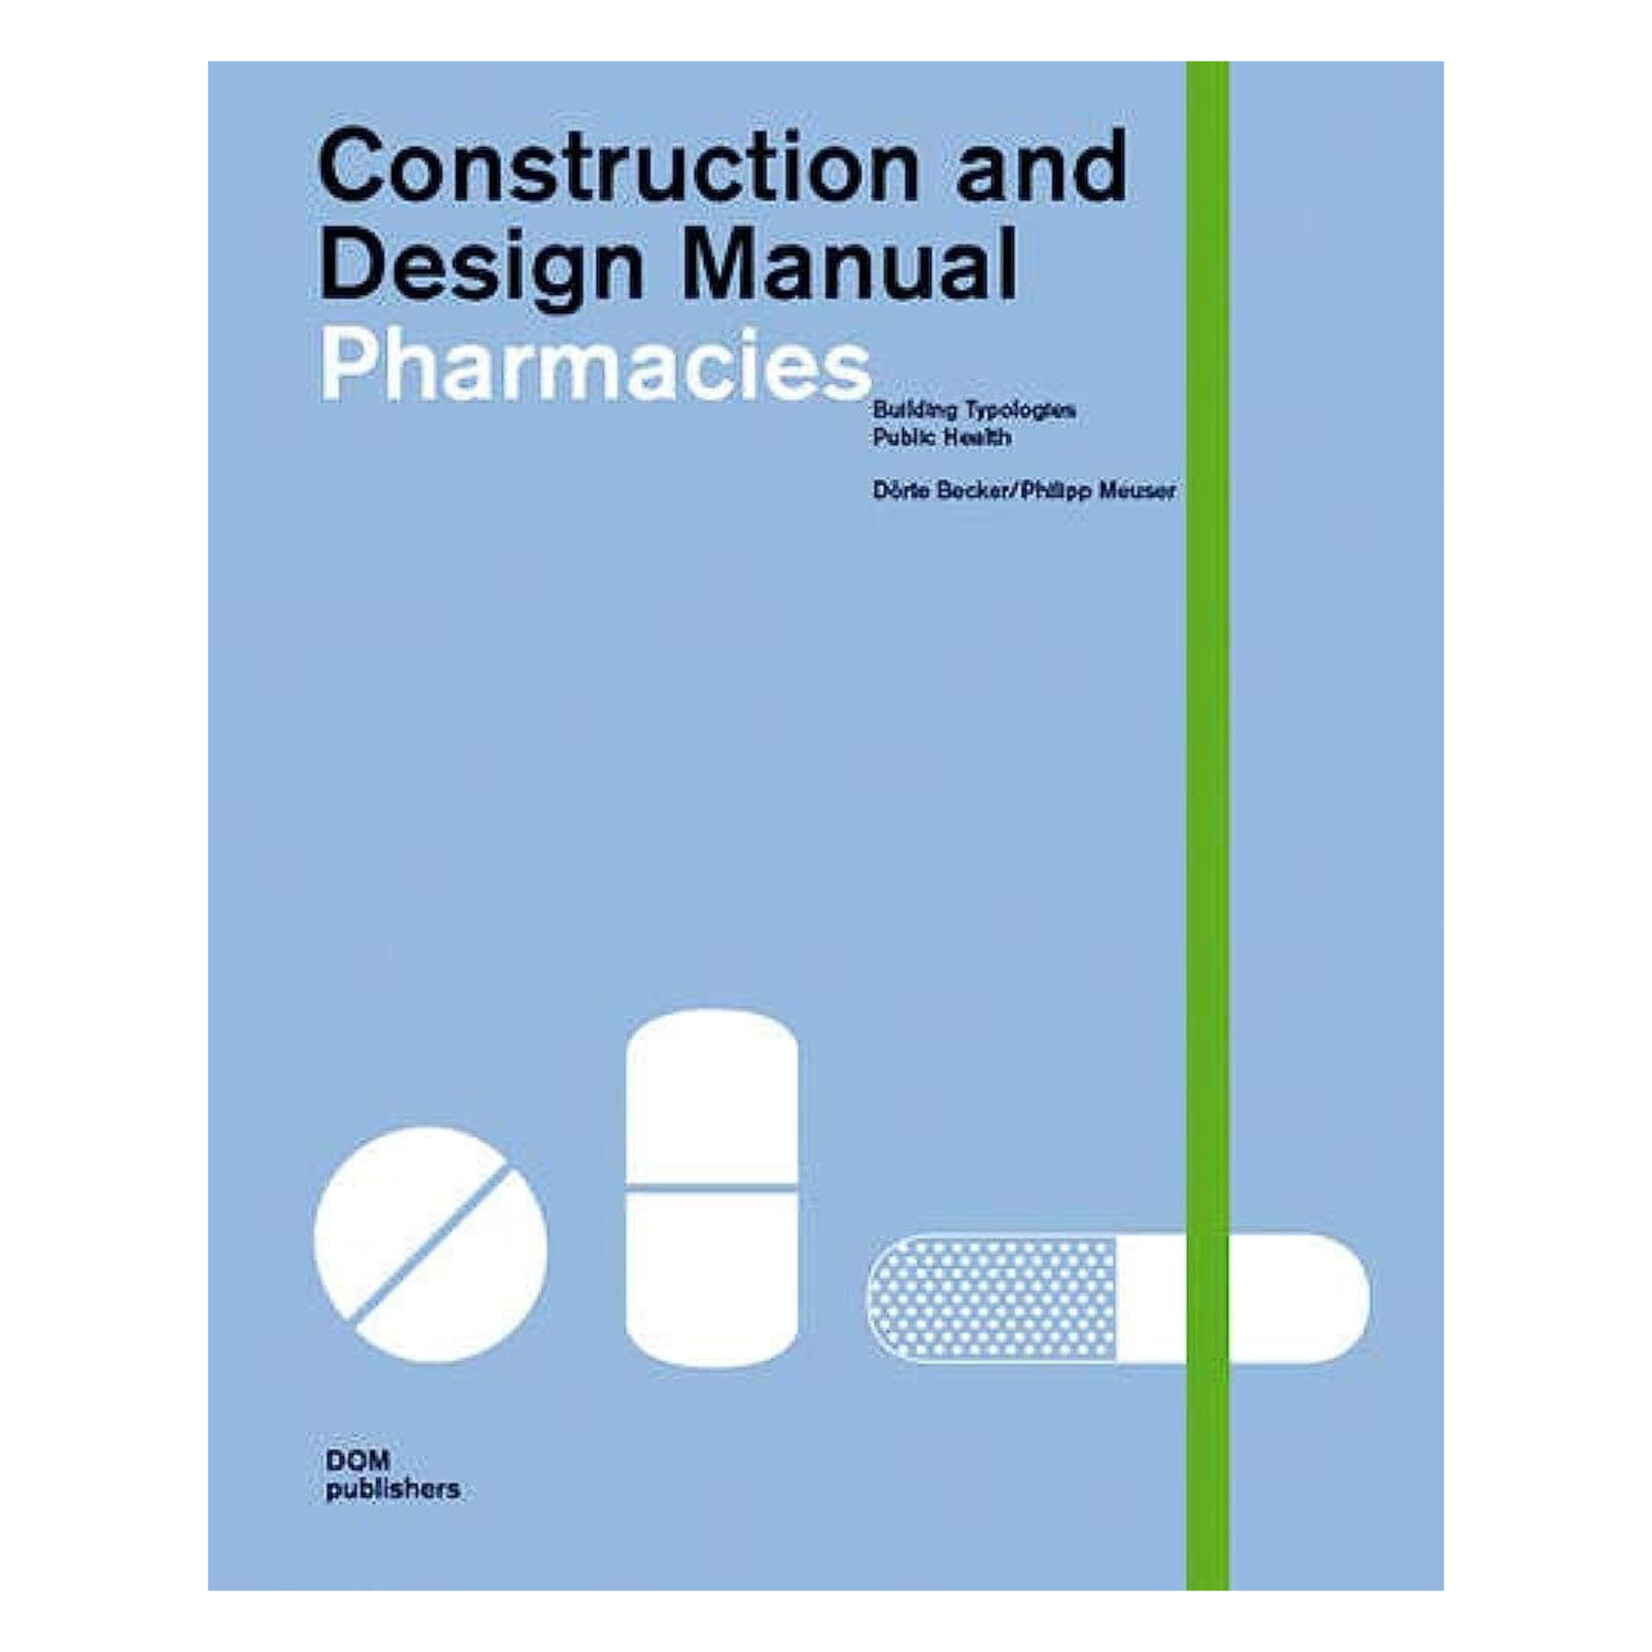 Construction and Design Manual: Pharmacies